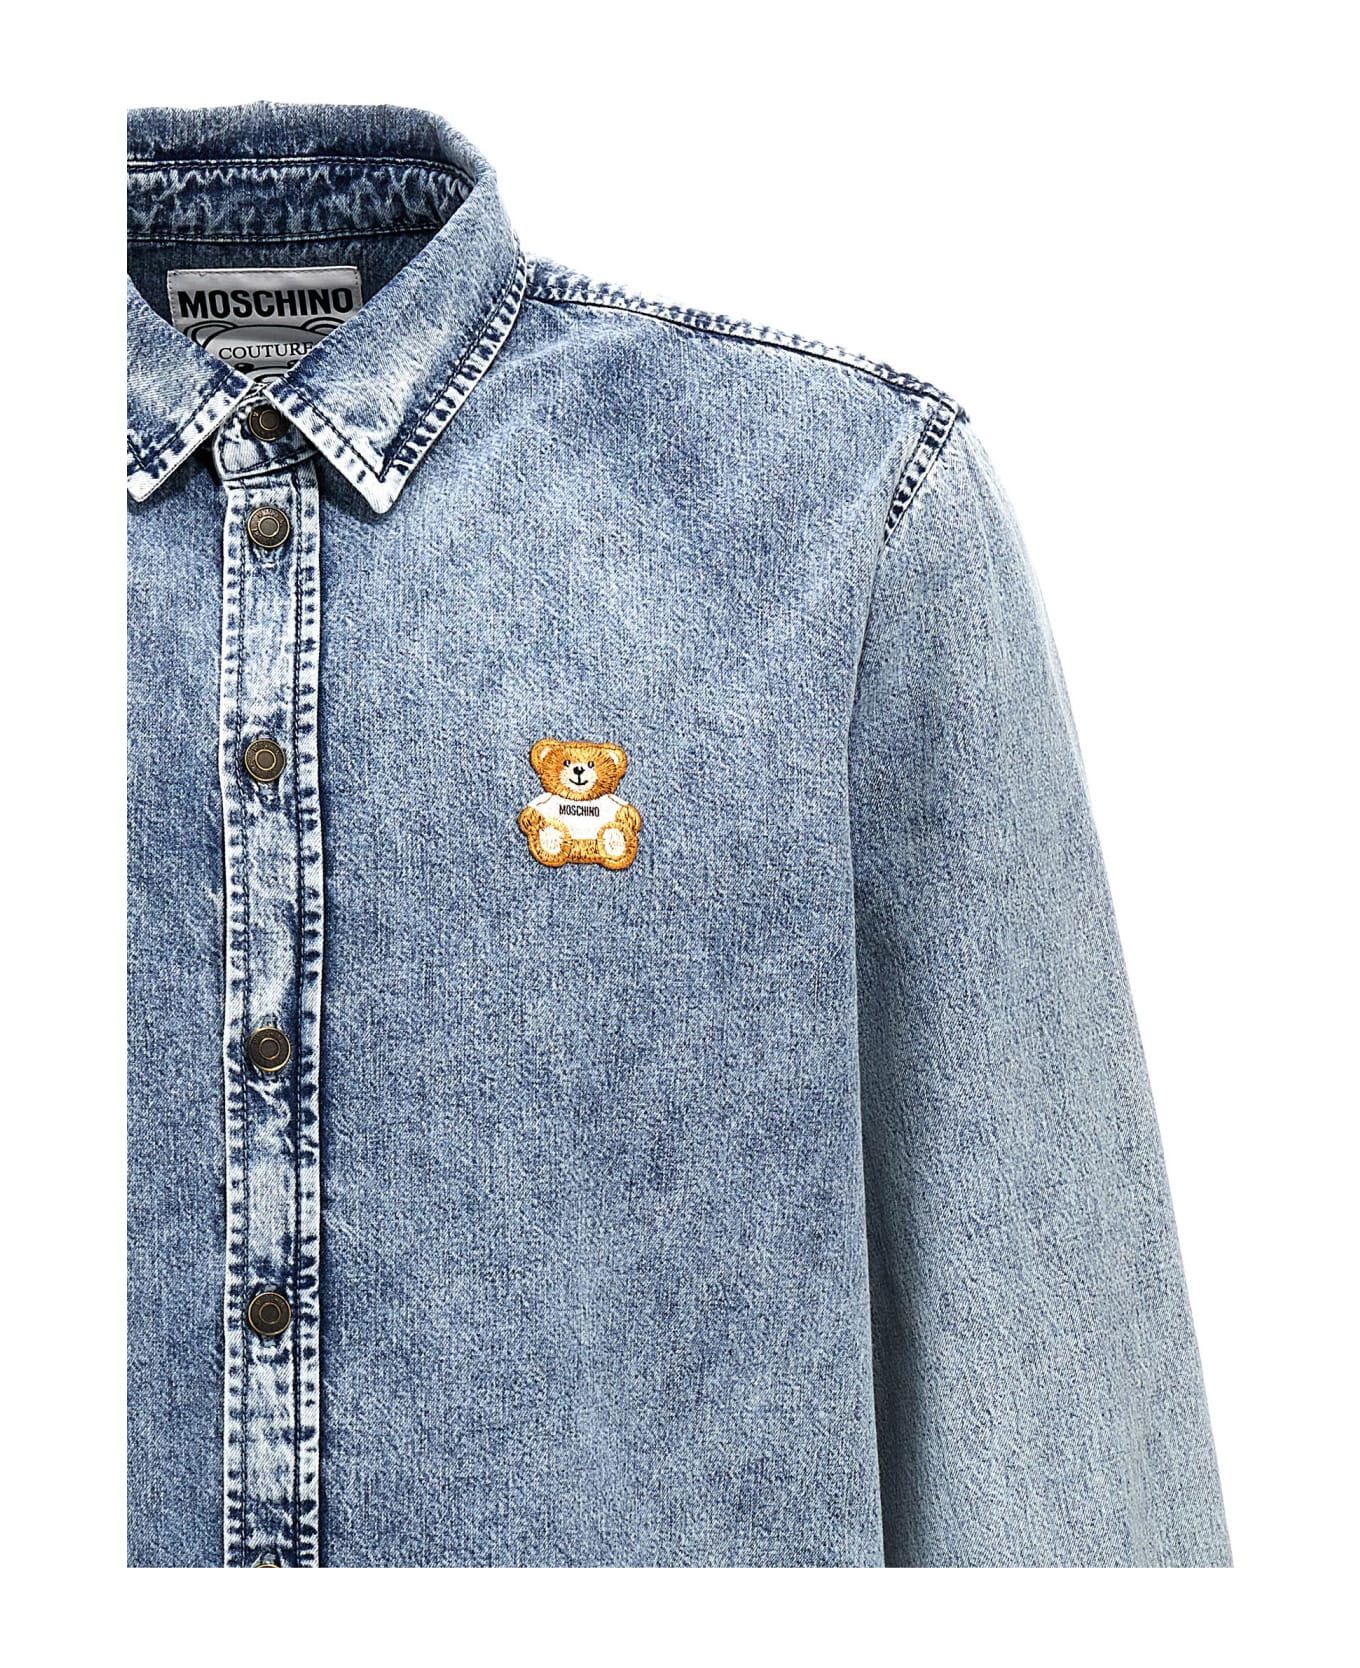 Moschino 'teddy' Shirt - Light Blue